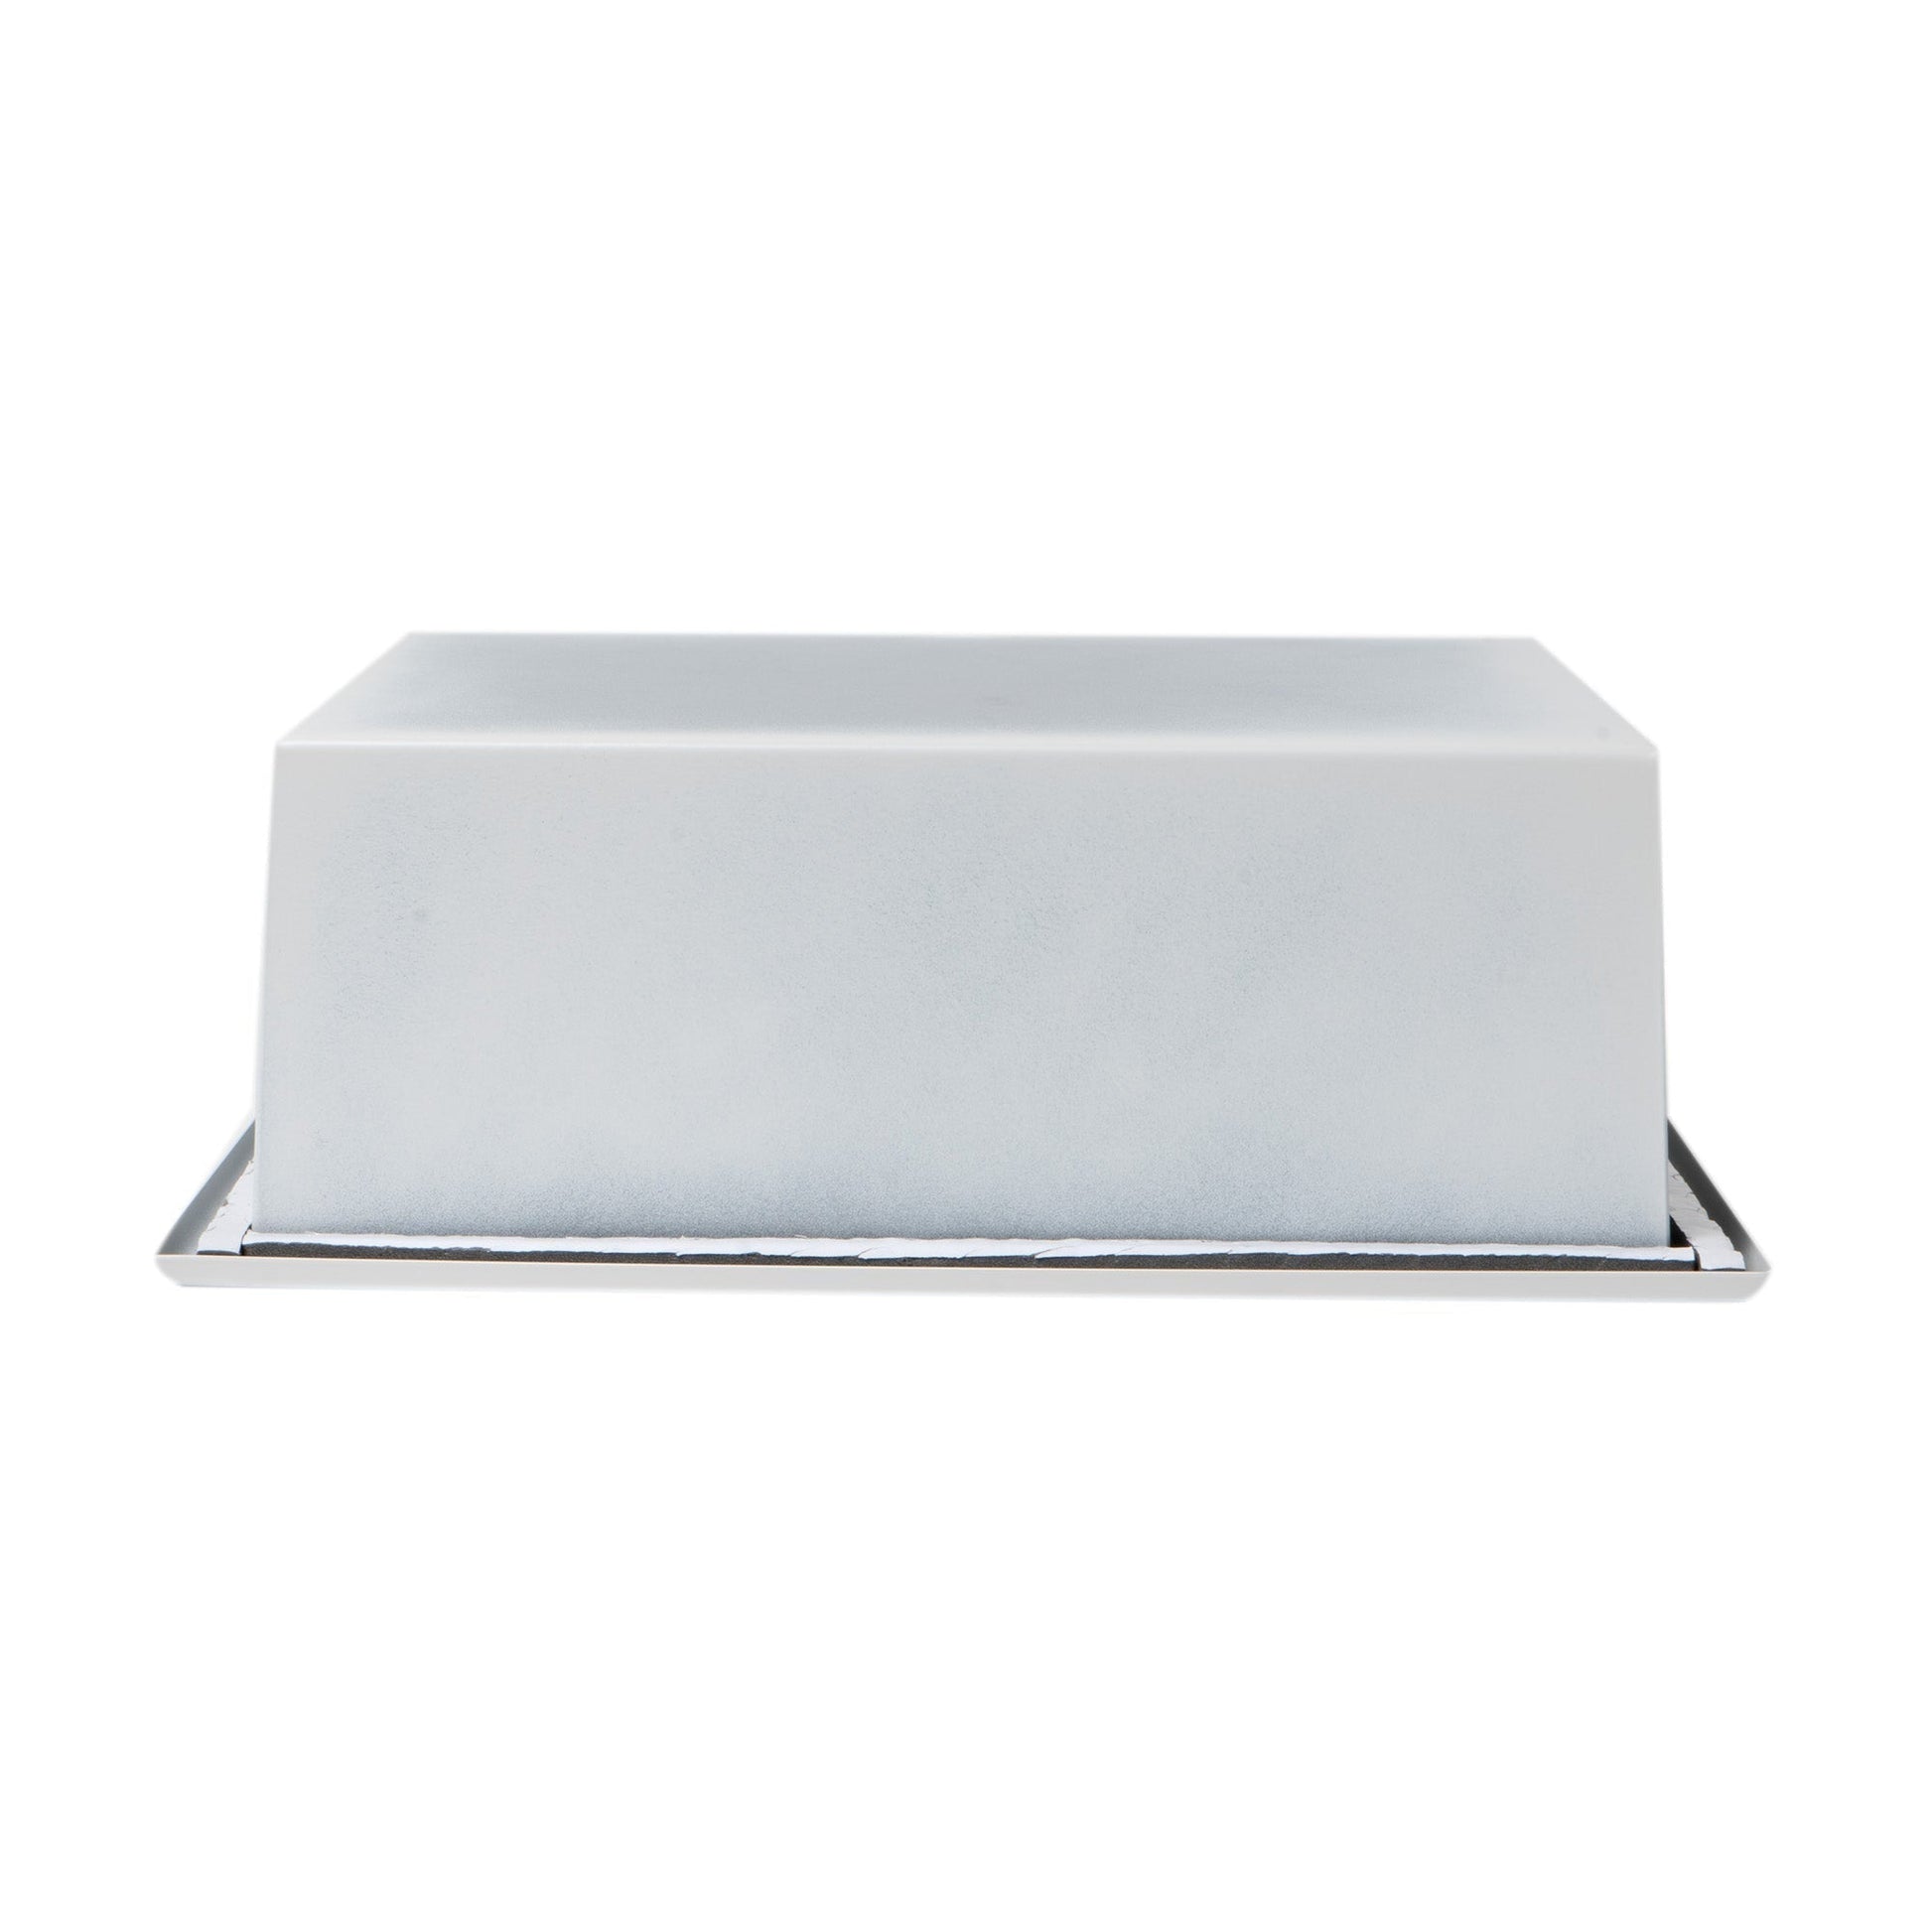 ALFI Brand ABNC1212-W 12" White Matte Stainless Steel Square Single Shelf Bath Shower Niche